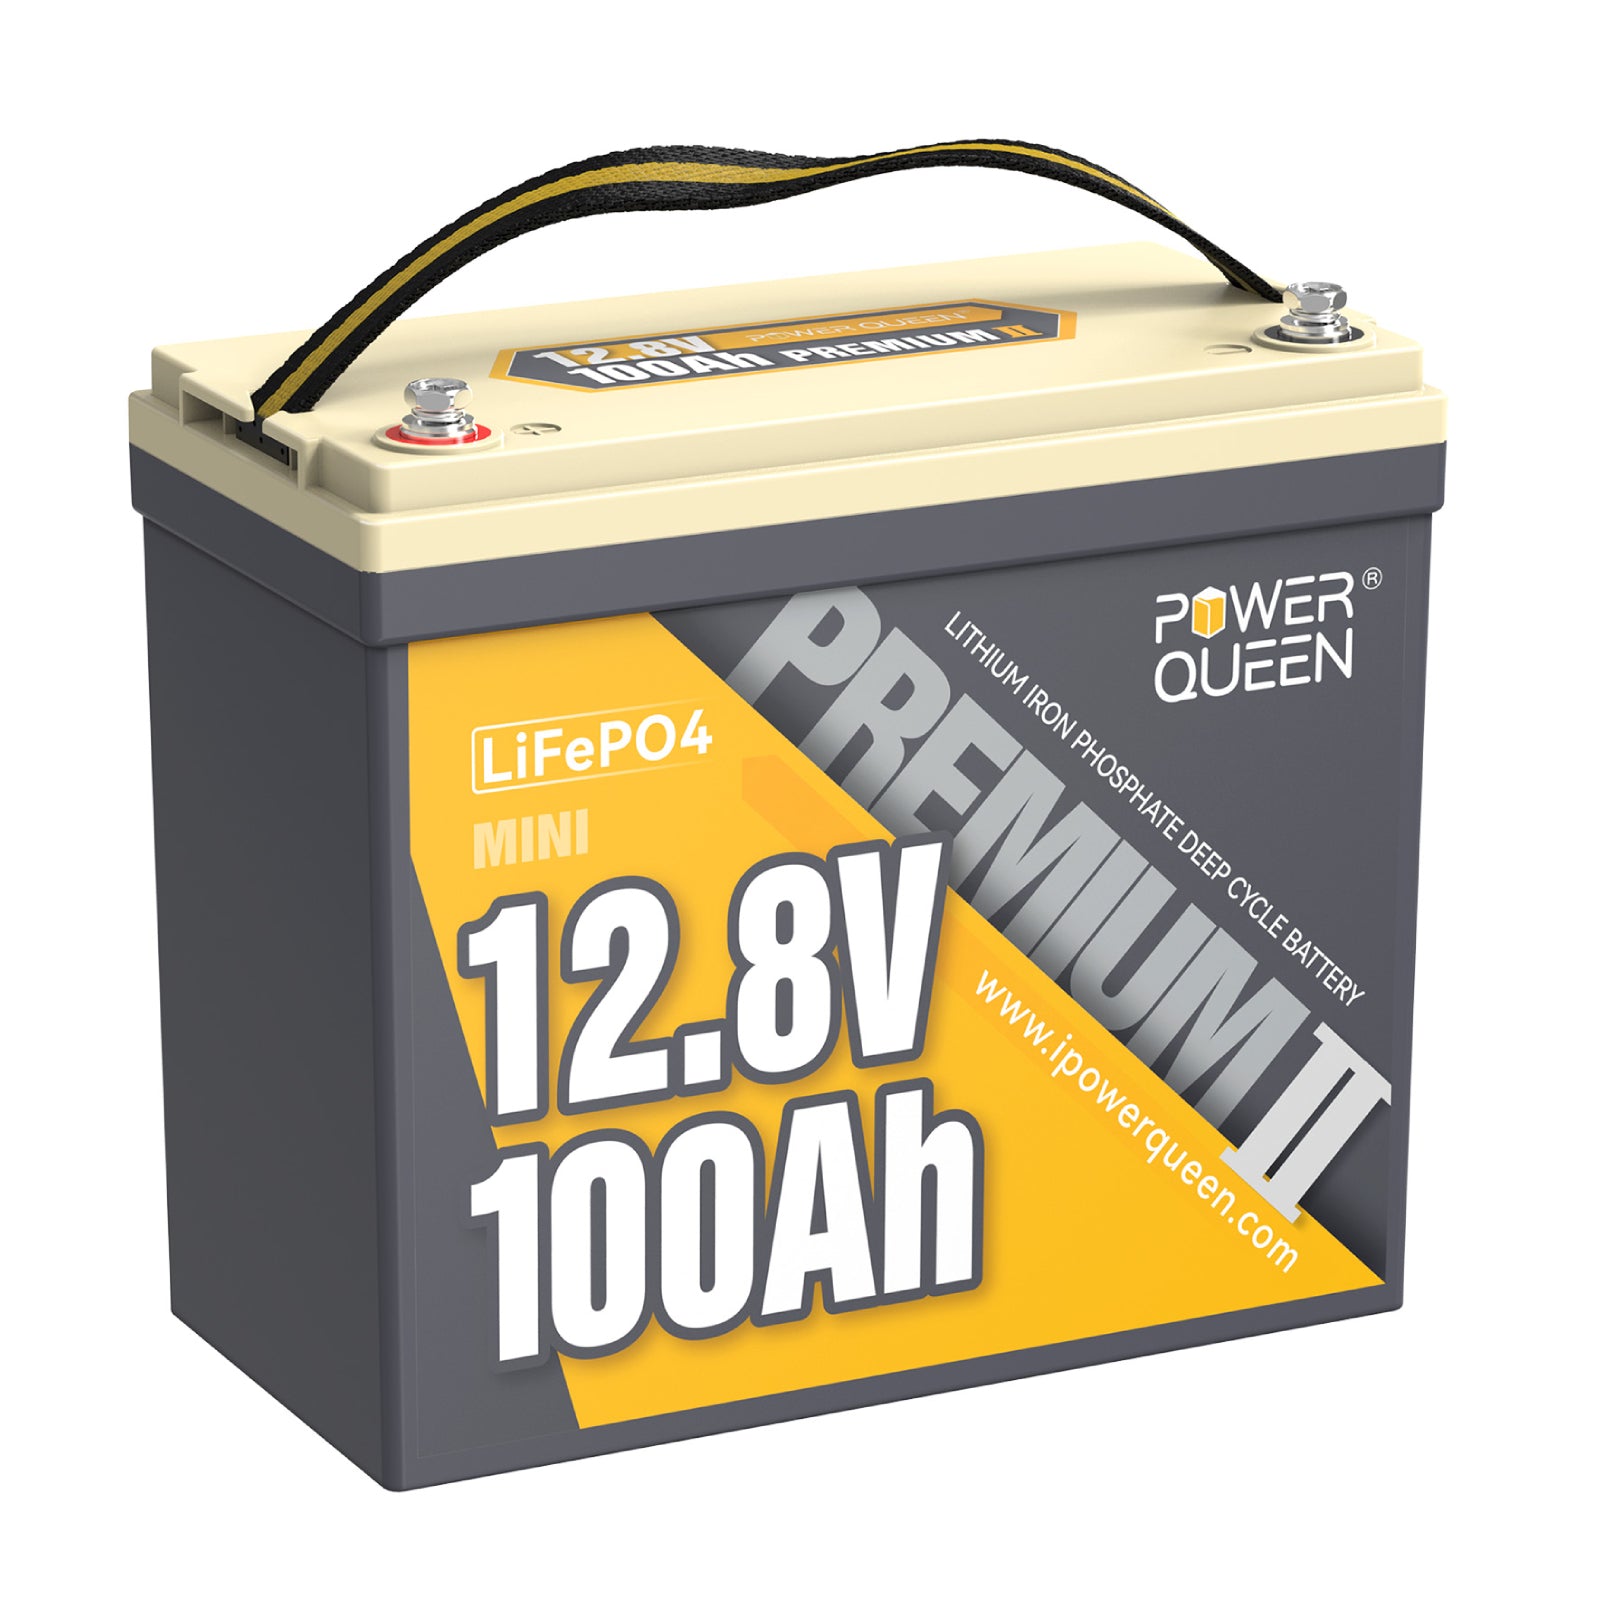 【0% IVA】Batería Mini LiFePO4 Power Queen de 12,8 V y 100 Ah, BMS integrado de 100 A